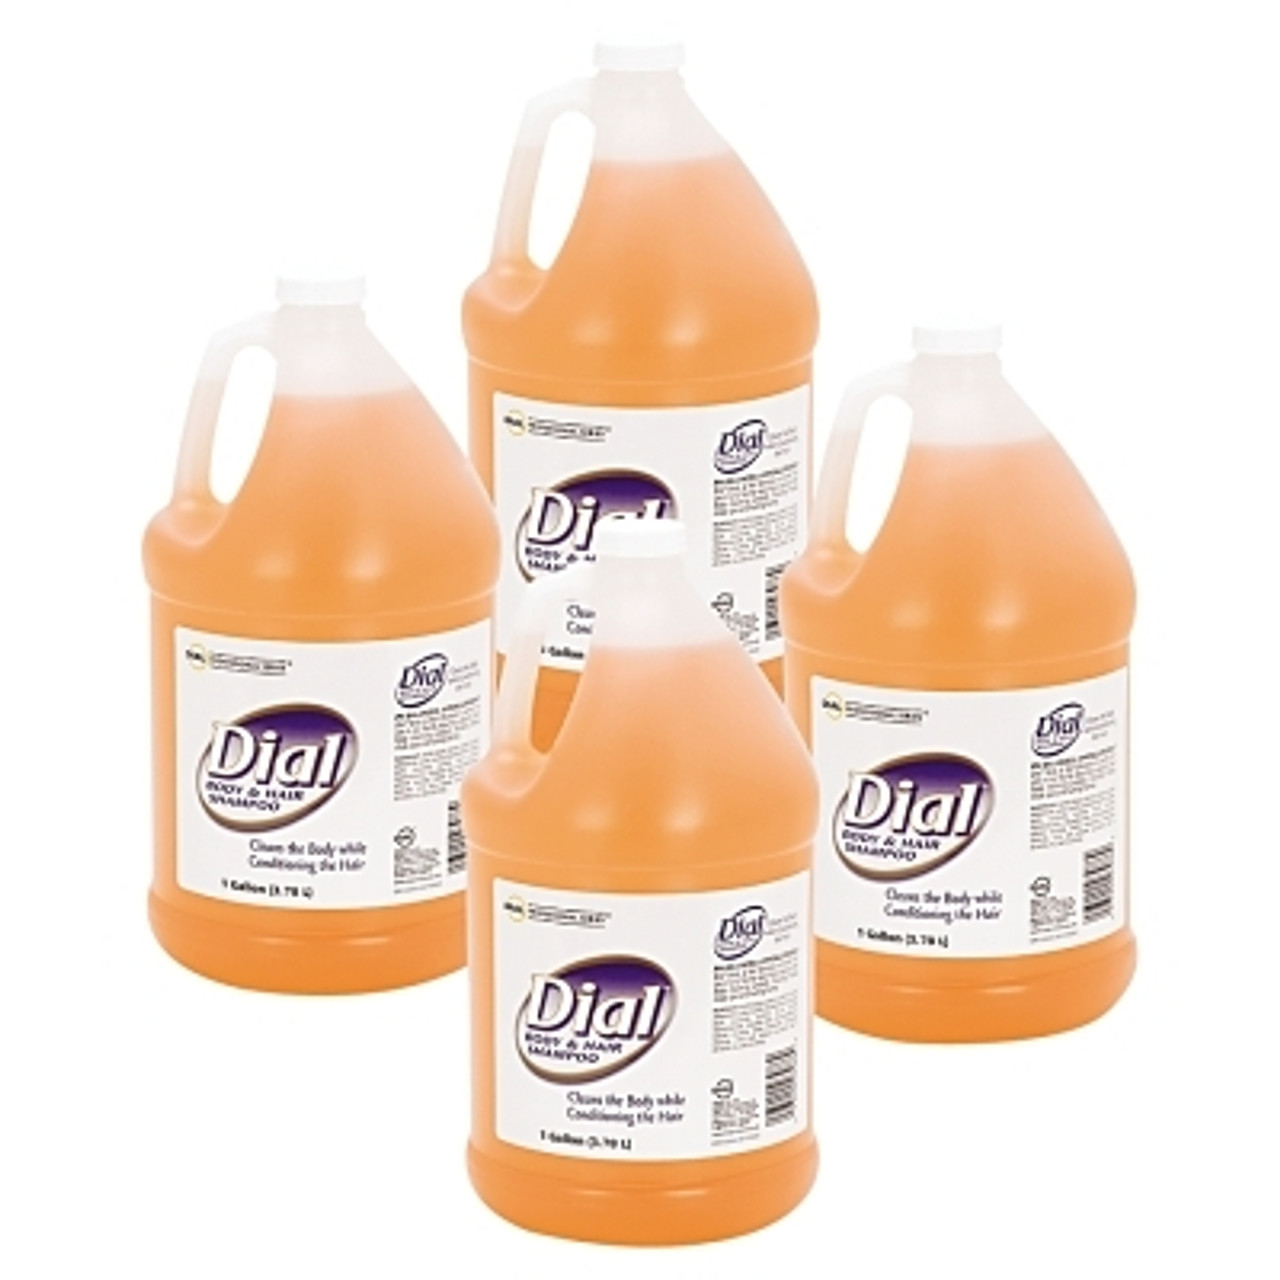 Fast Orange Smooth Lotion Hand Cleaner, Citrus, Bottle w/Pump, 1